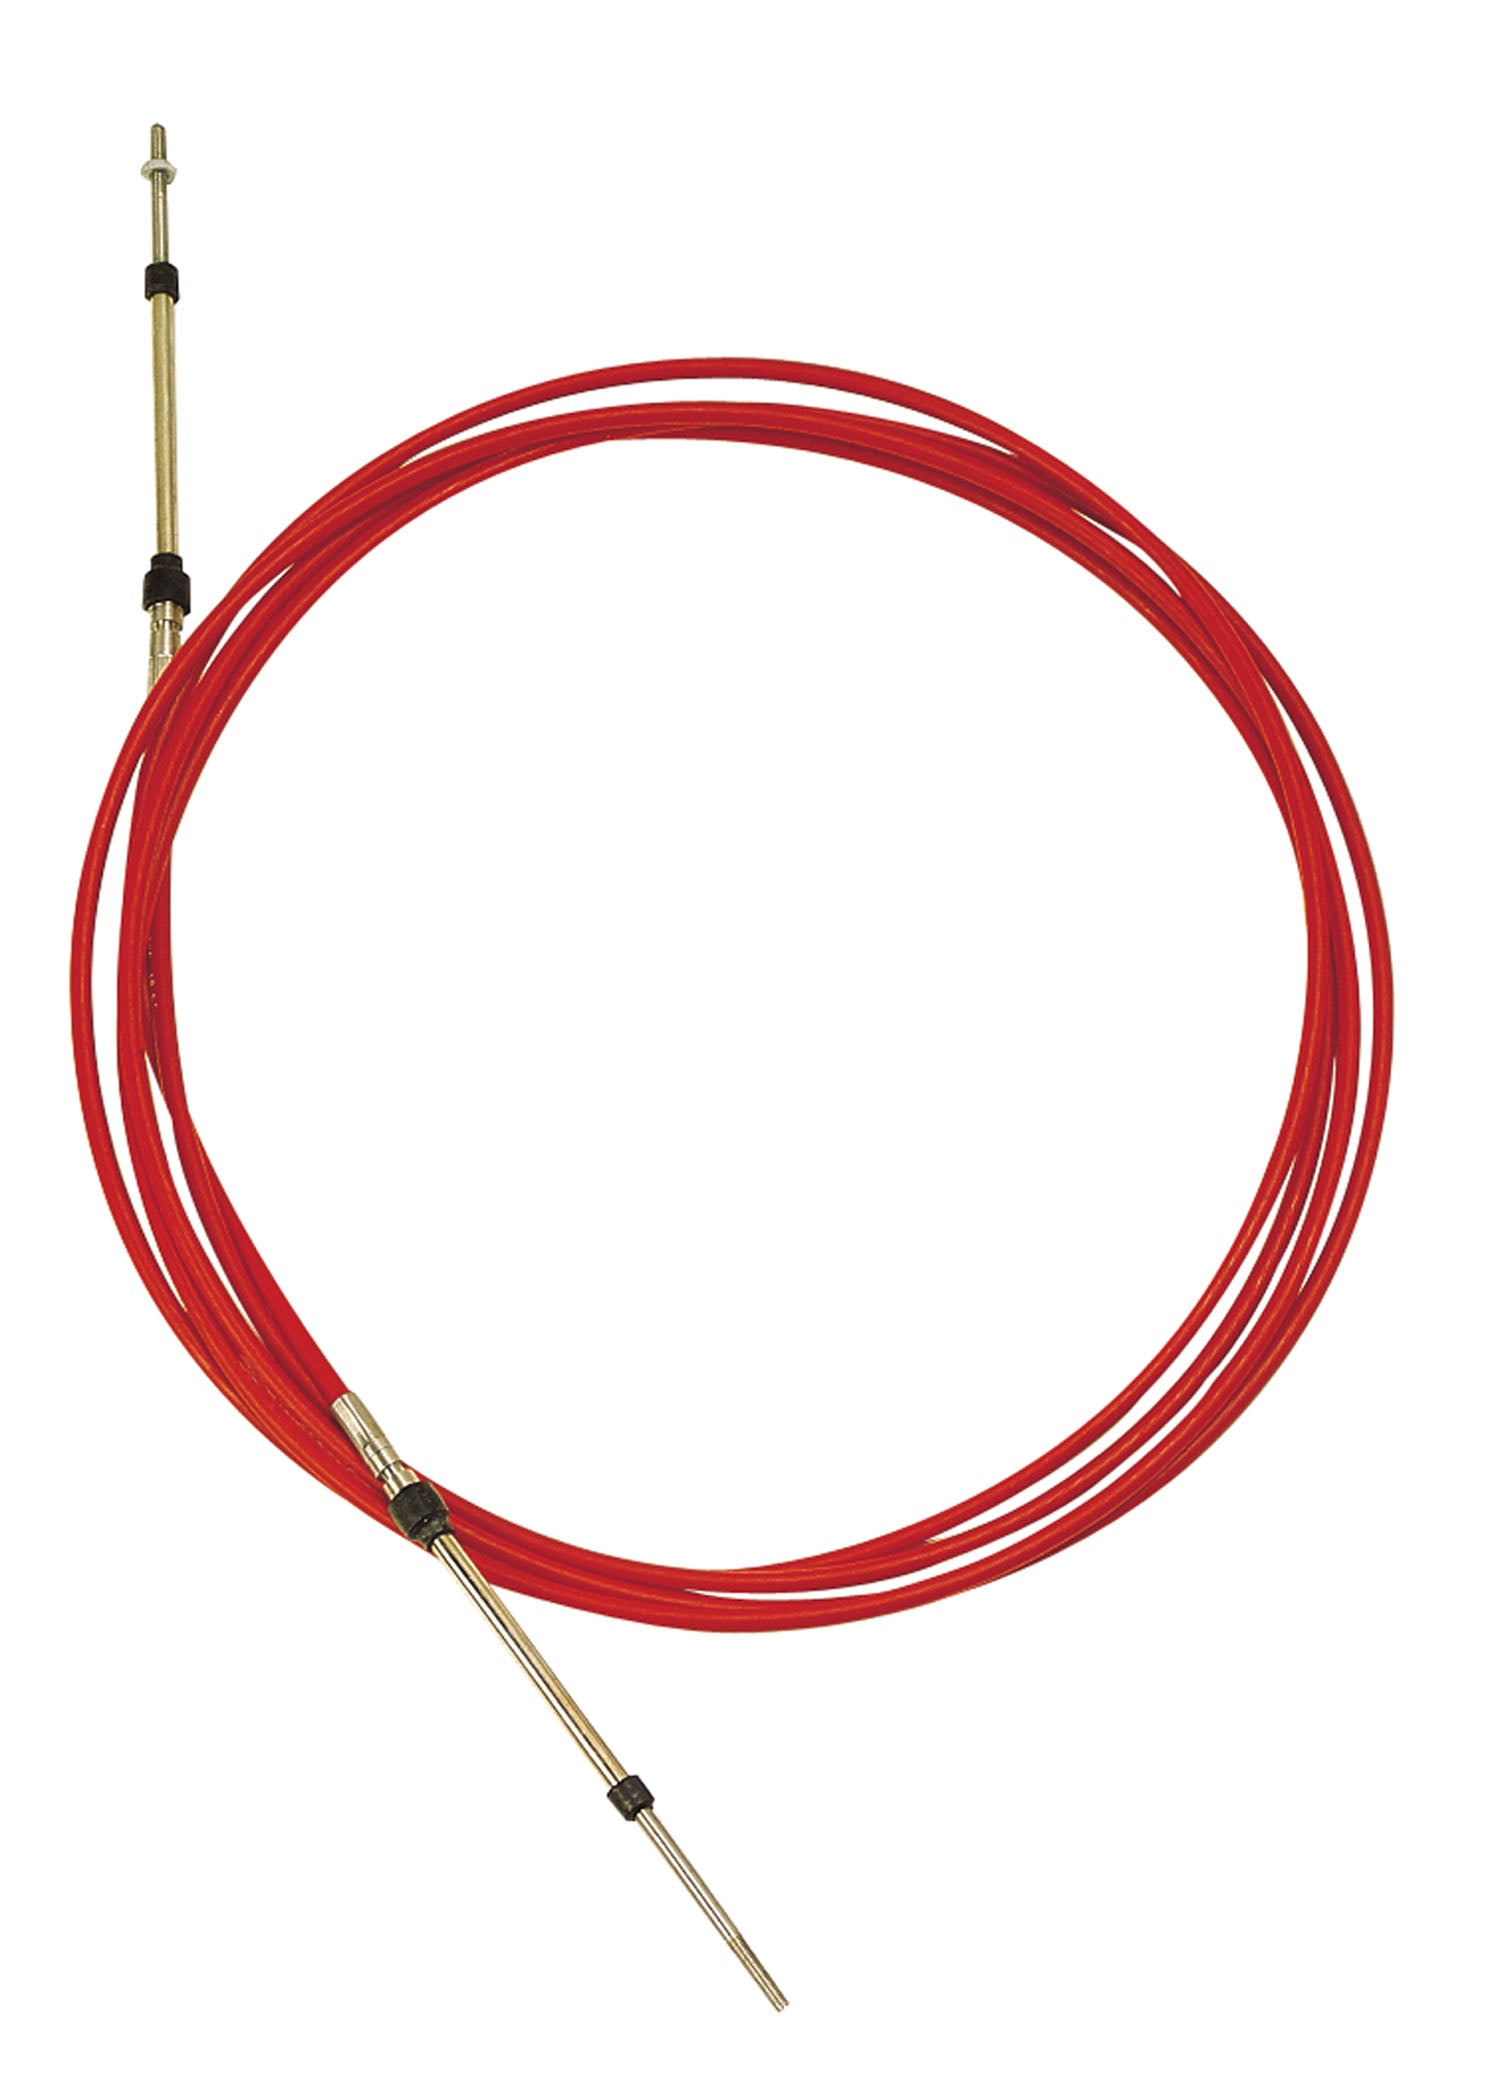 Vetus CABLE80 - Vetus cable type 33c 8.0m